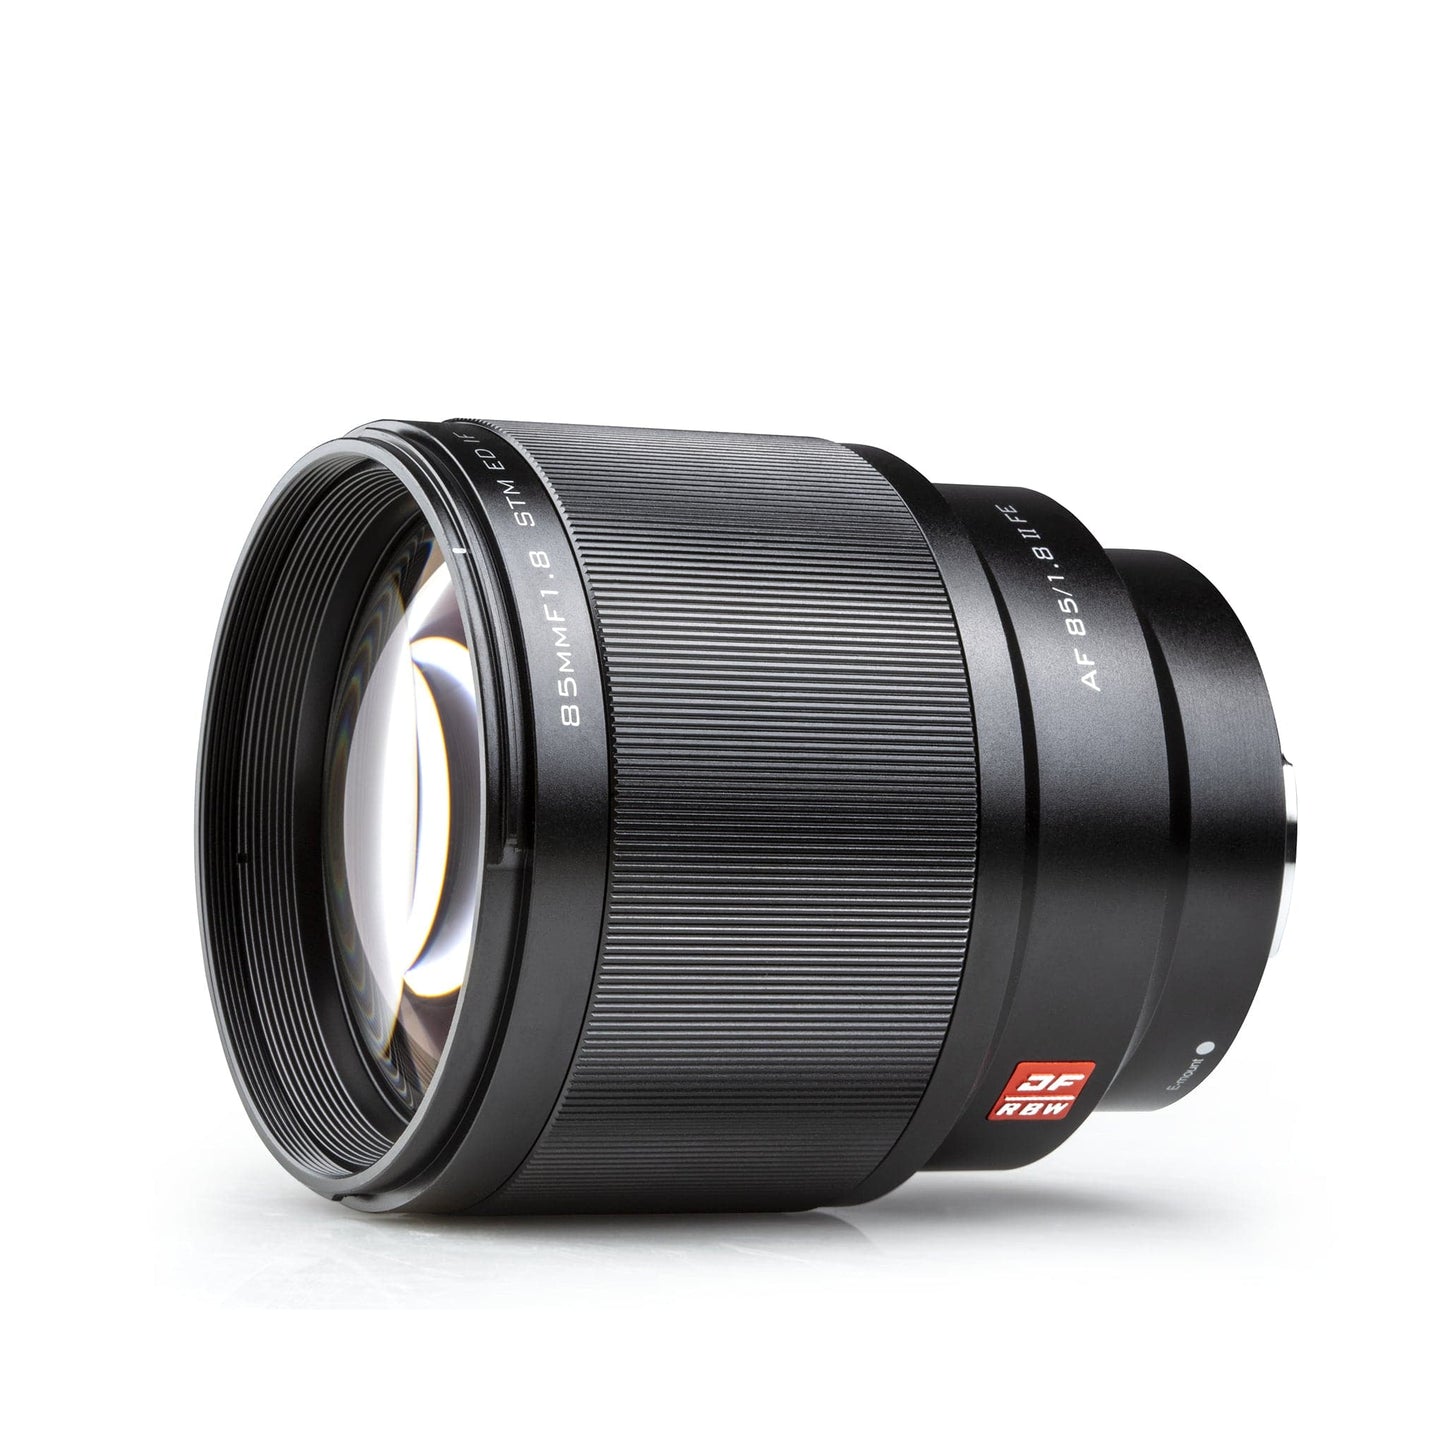 Viltrox 85mm f1.8 FE-mount Sony Autofocus Prime Lens with Quality Lens Hood Fast Eye-AF Mark II